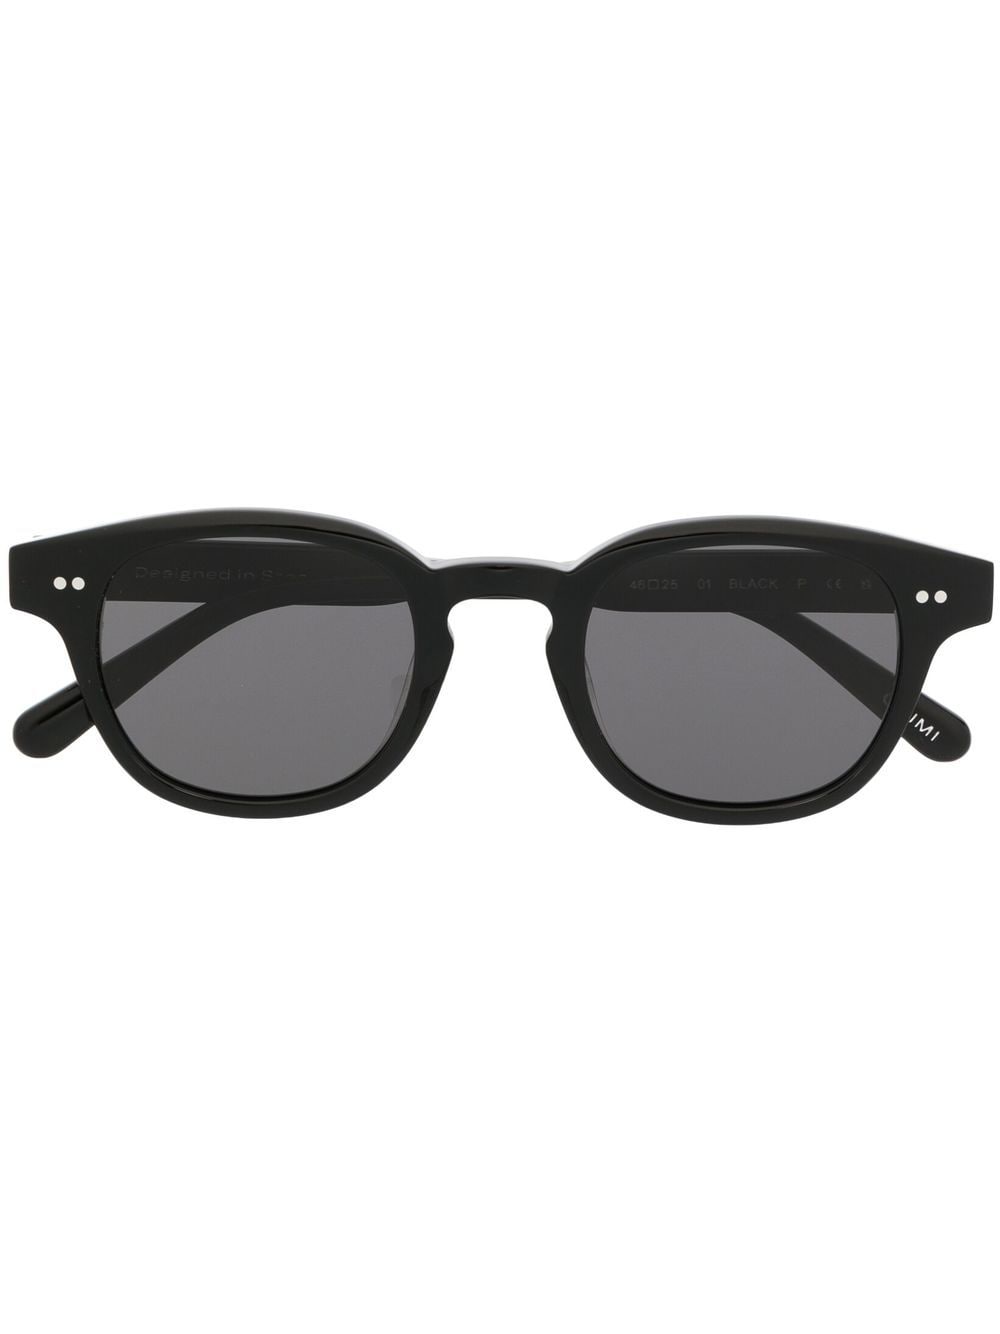 01M round-frame sunglasses